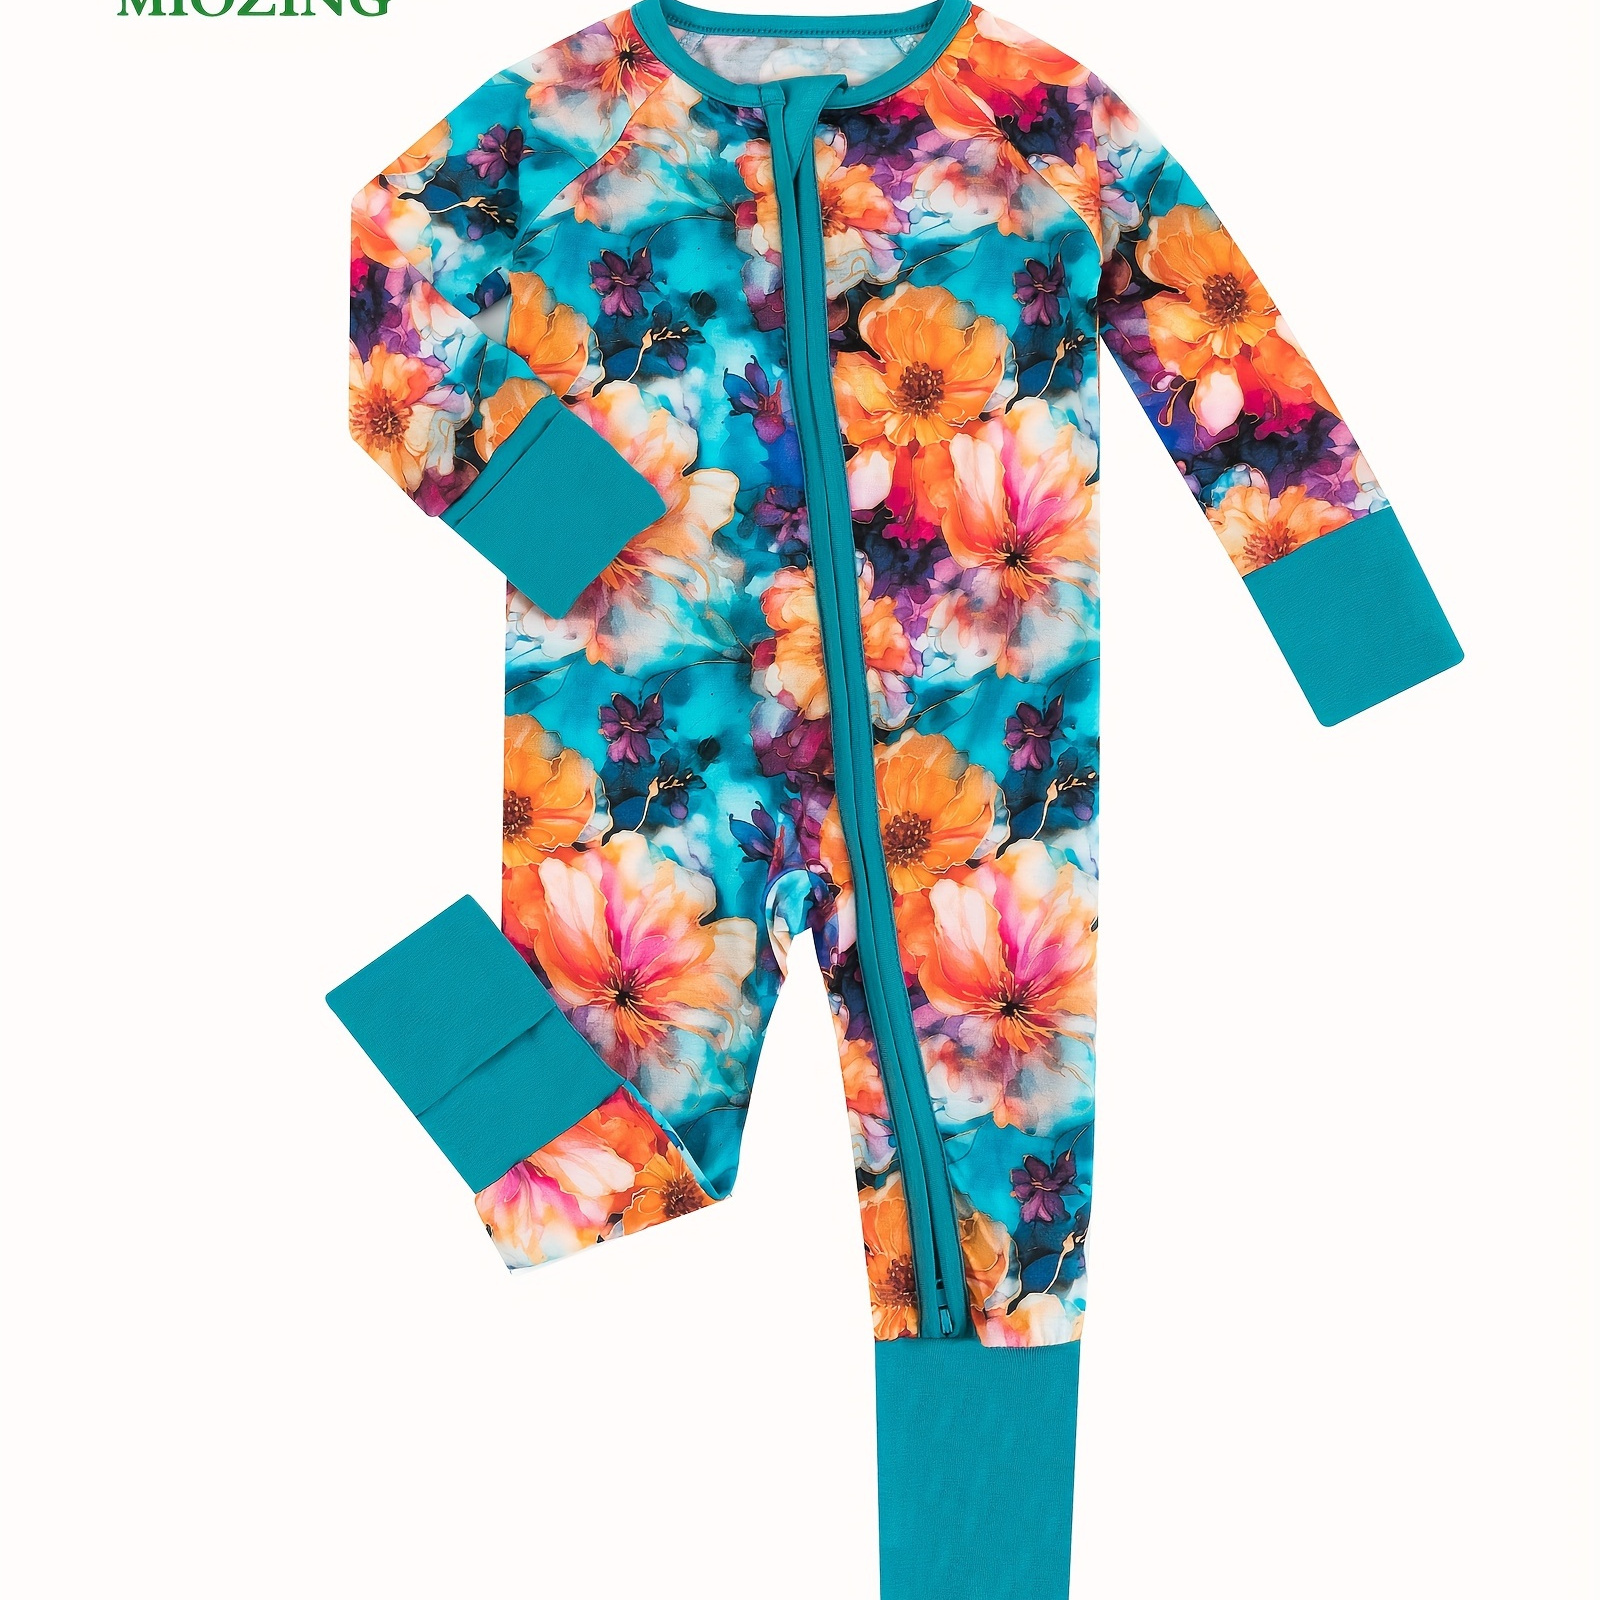 

Miozing Bamboo Fiber Bodysuit For Infants, Color Clash Flower Pattern Long Sleeve Onesie, Baby Girl's Clothing